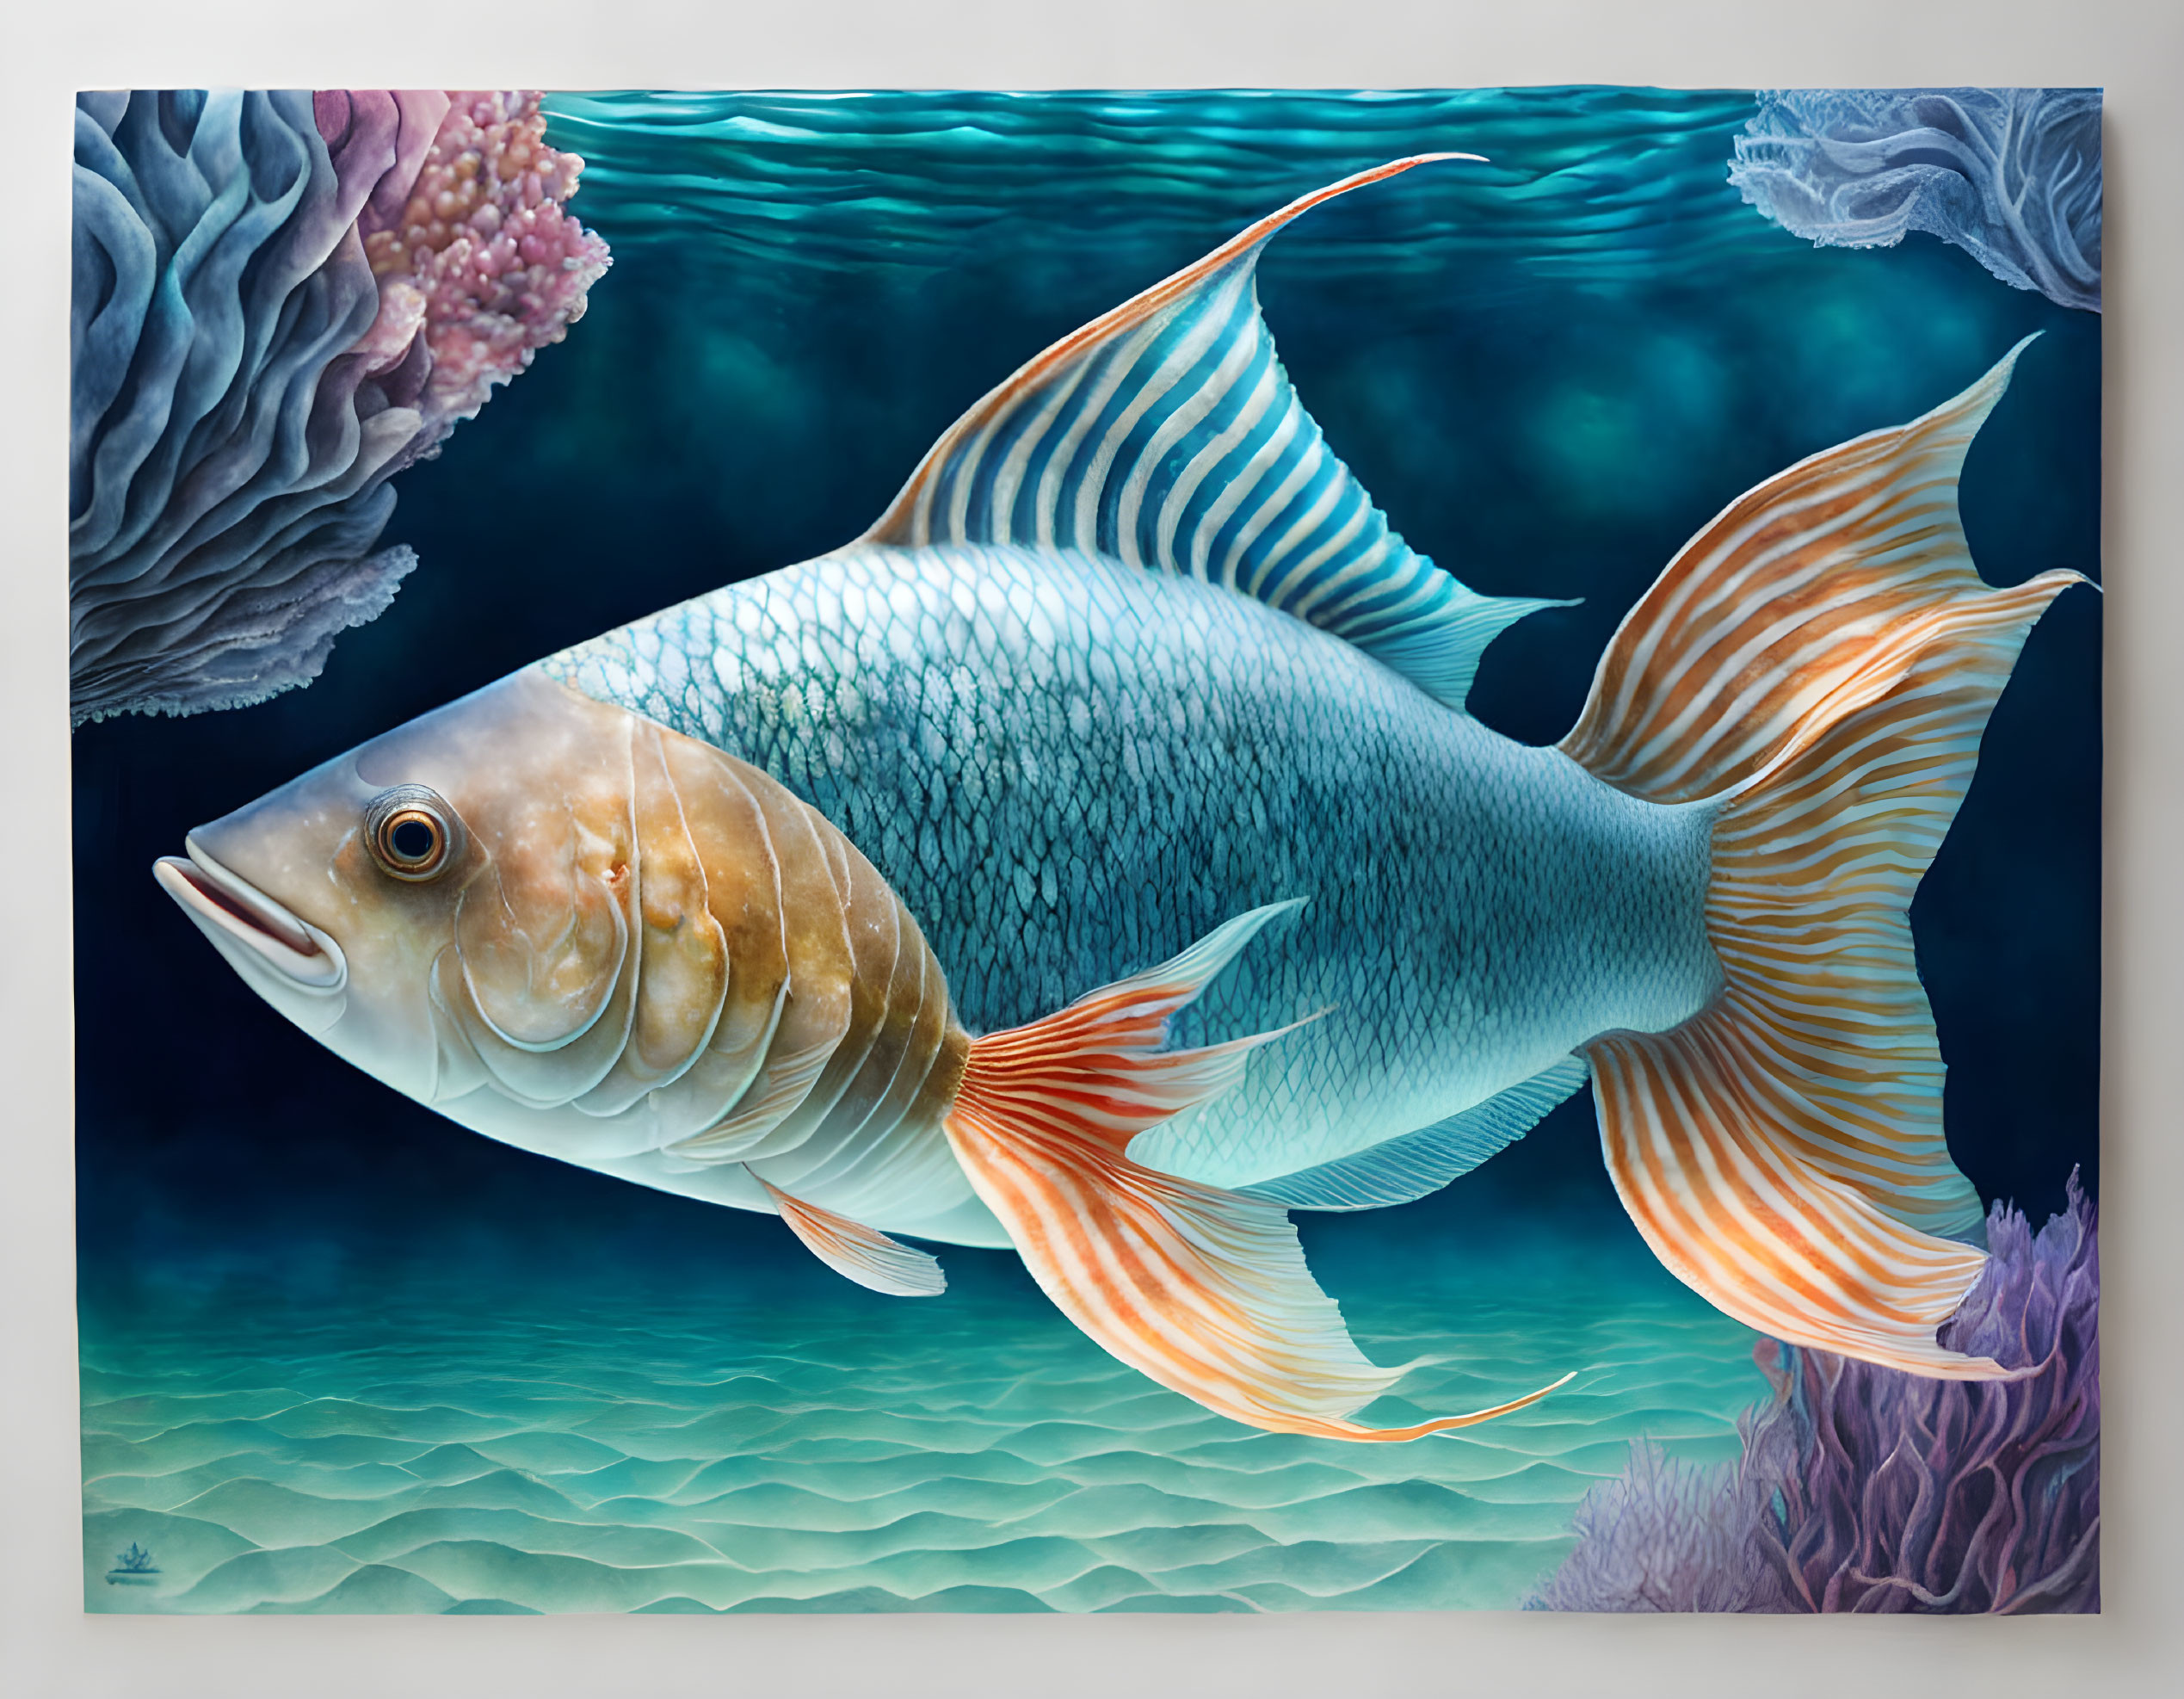  Deep sea fish, by Maria Sibylla Merian